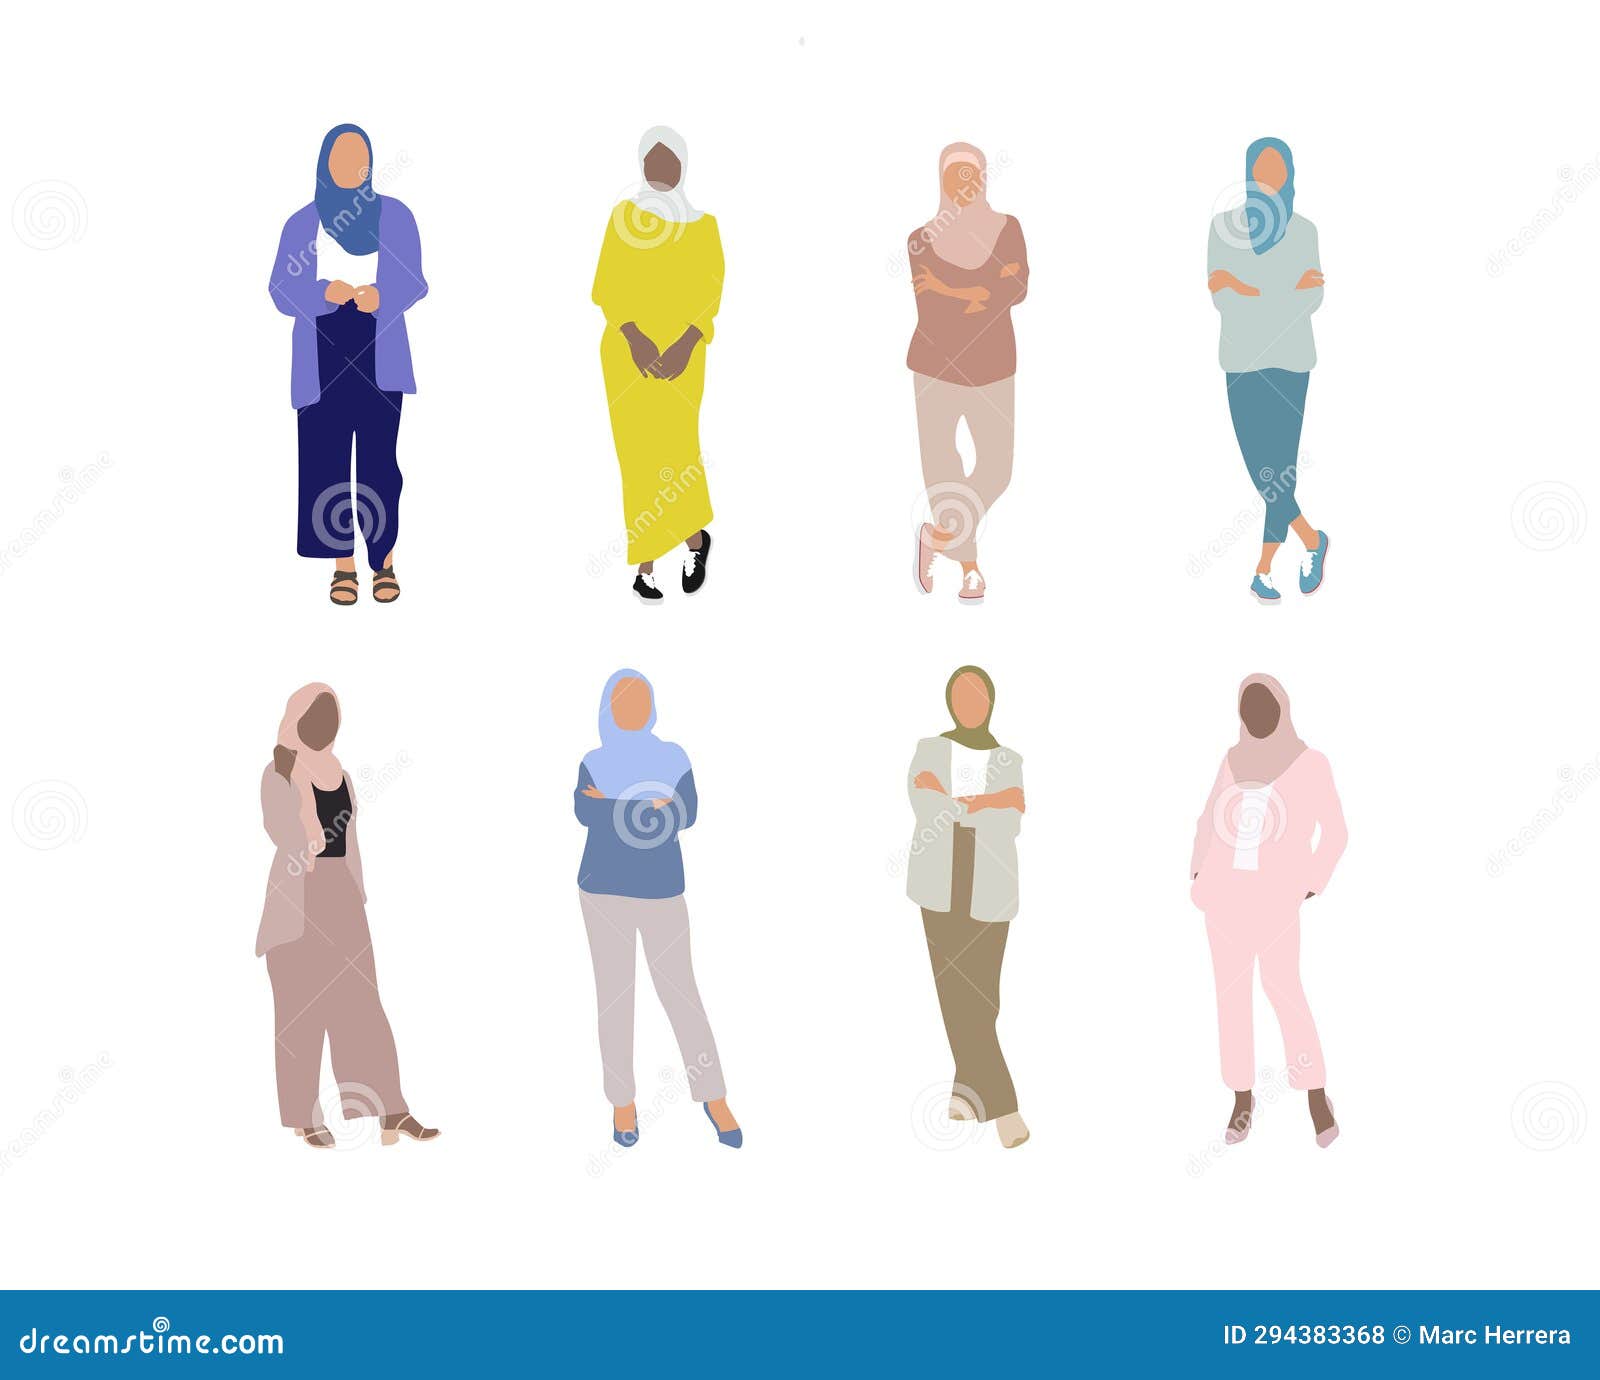 variety of different muslim women